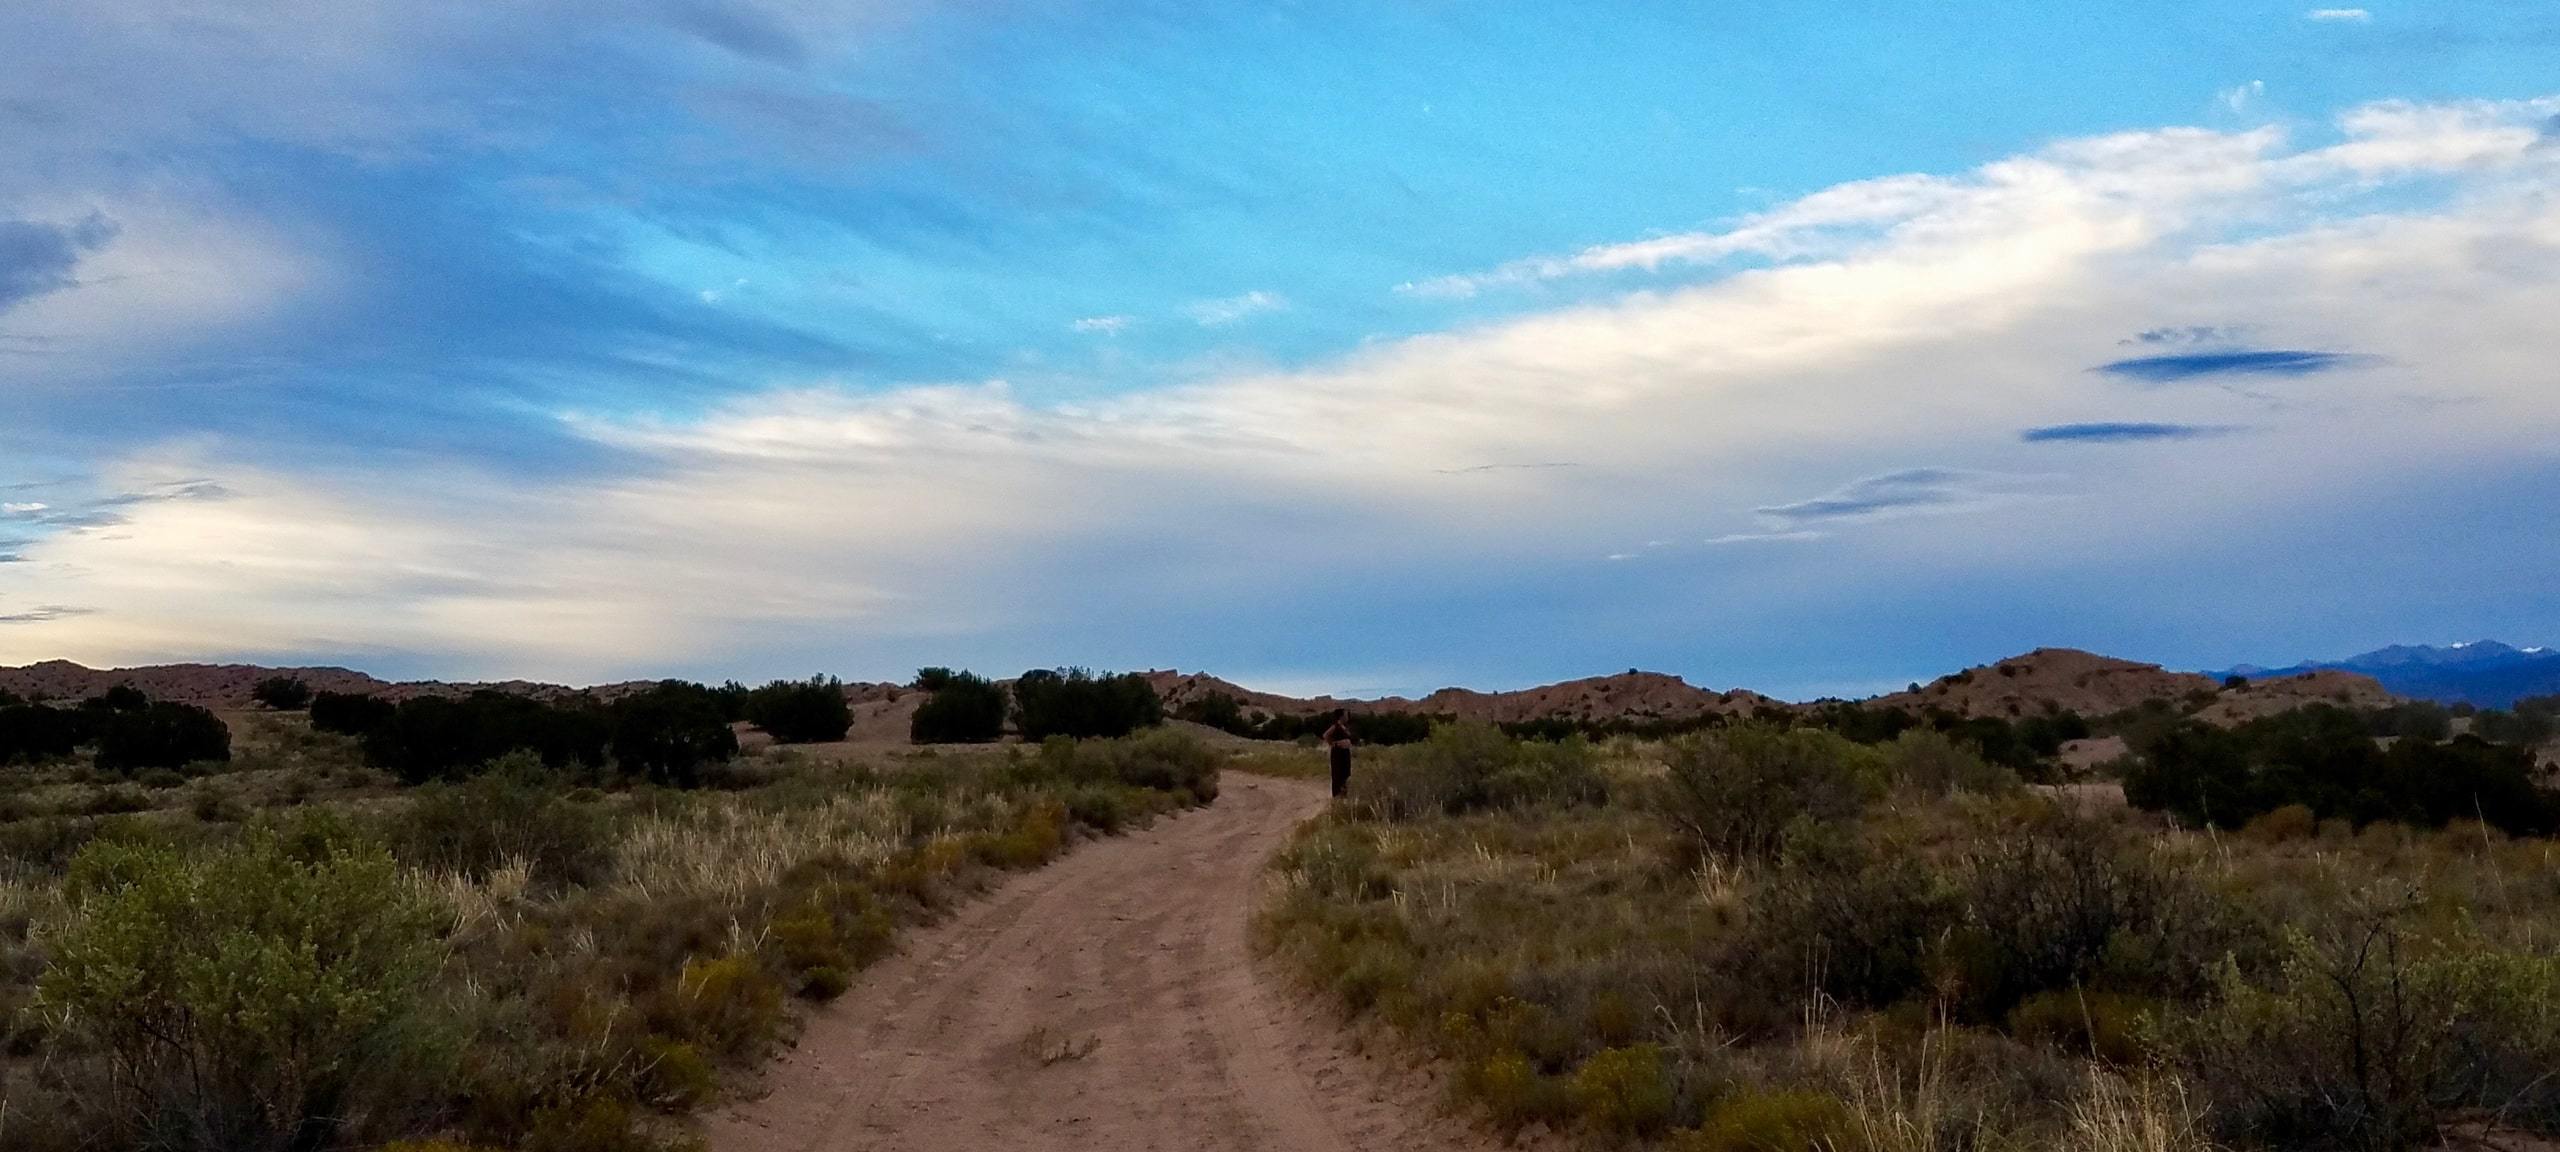 Landscape during sunrise in Pojoaque, New Mexico